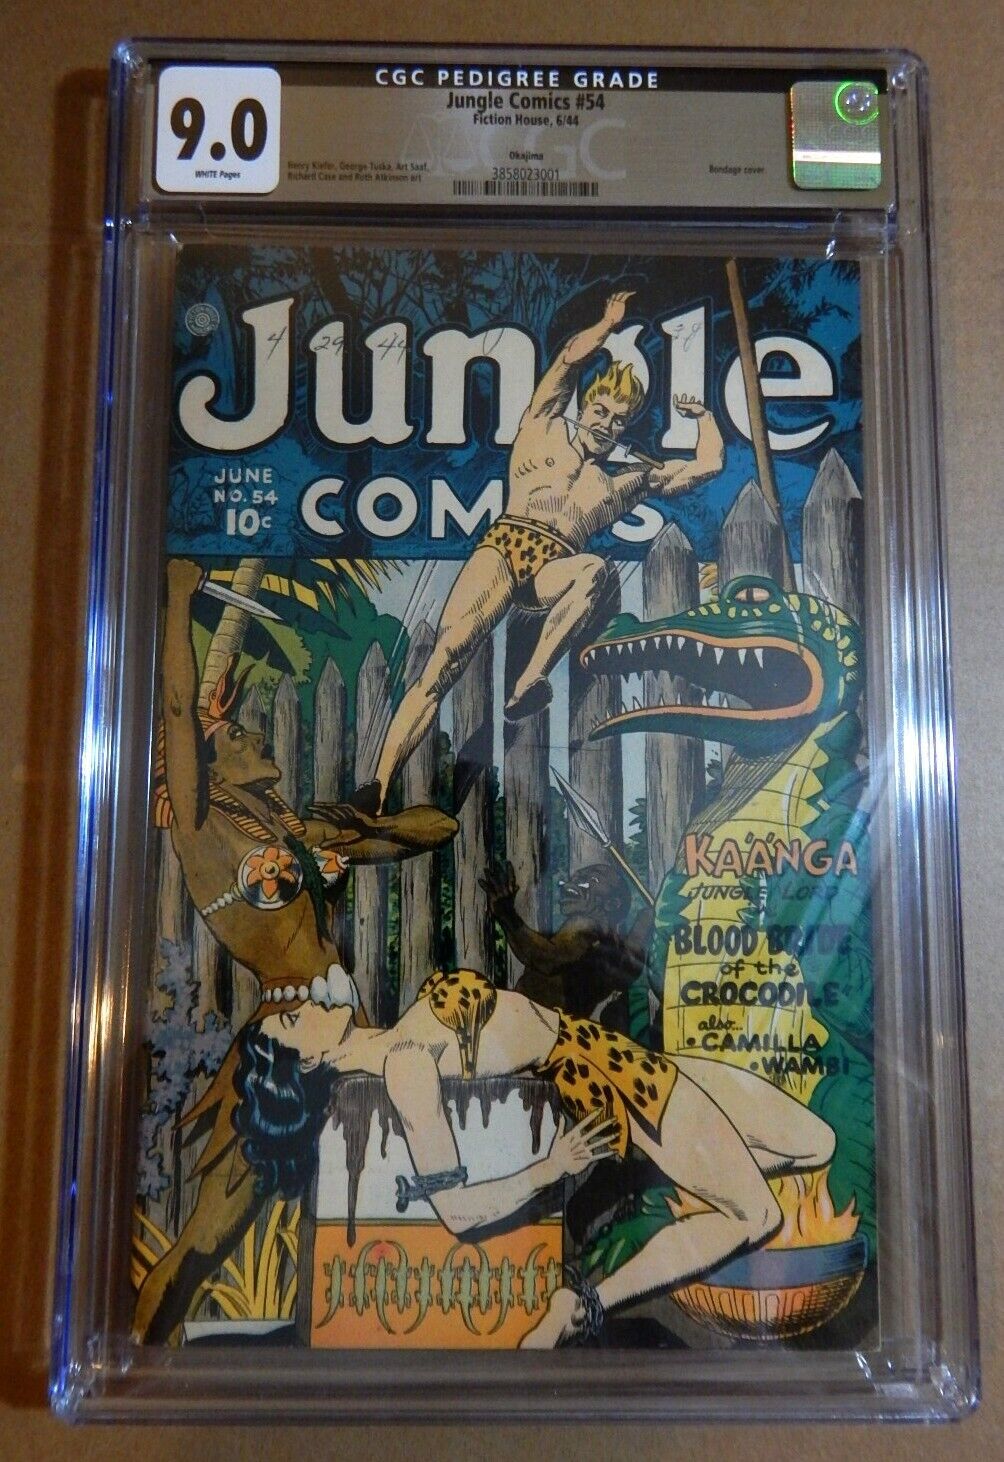  OKAJIMA  Jungle Comics 54 NM 90 CGC  Bondage Torture  Human Sacrifice Cover  